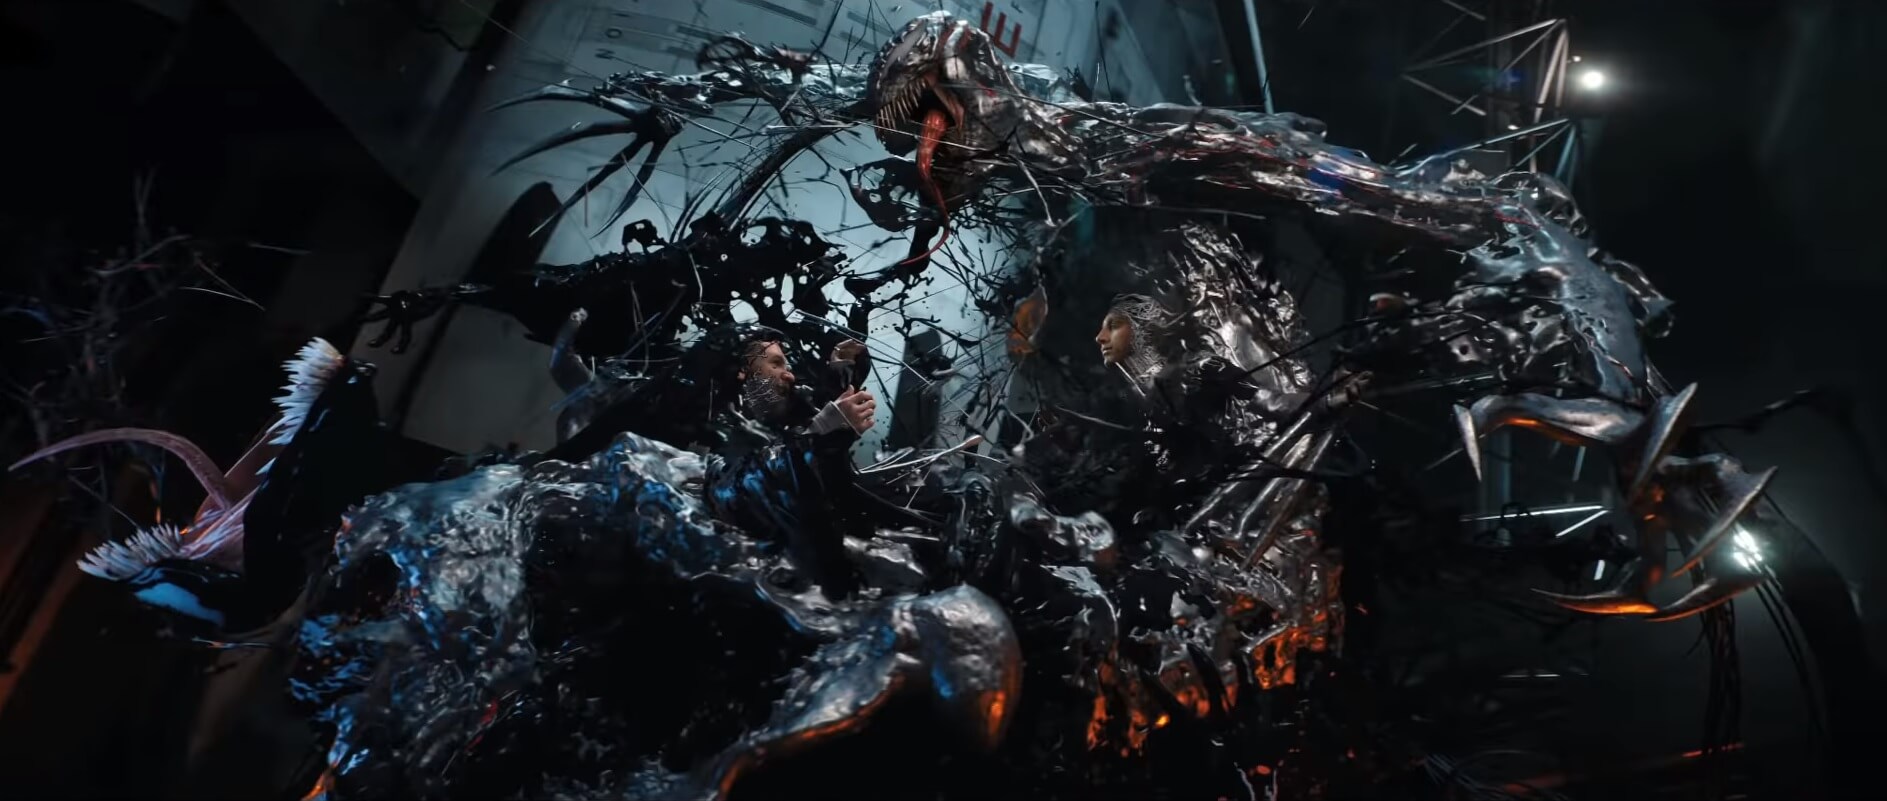 Marvel's Venom 2018 Movie Review_HD_Image2